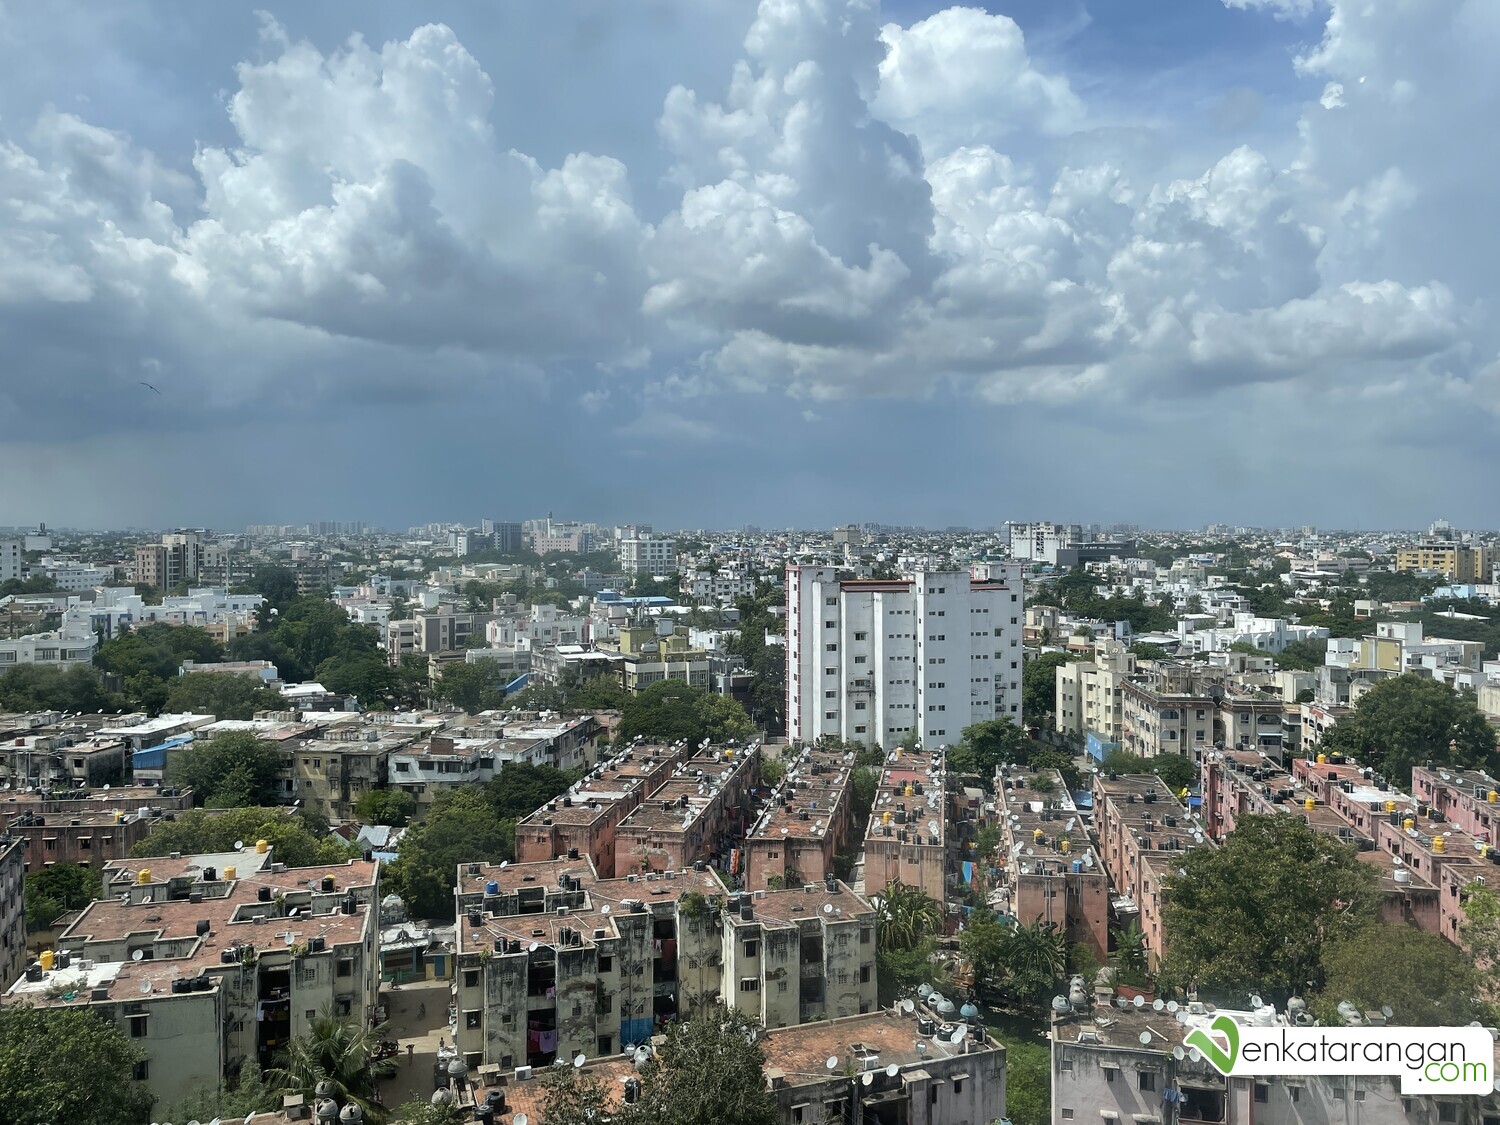 Chennai Nandanam's skyline